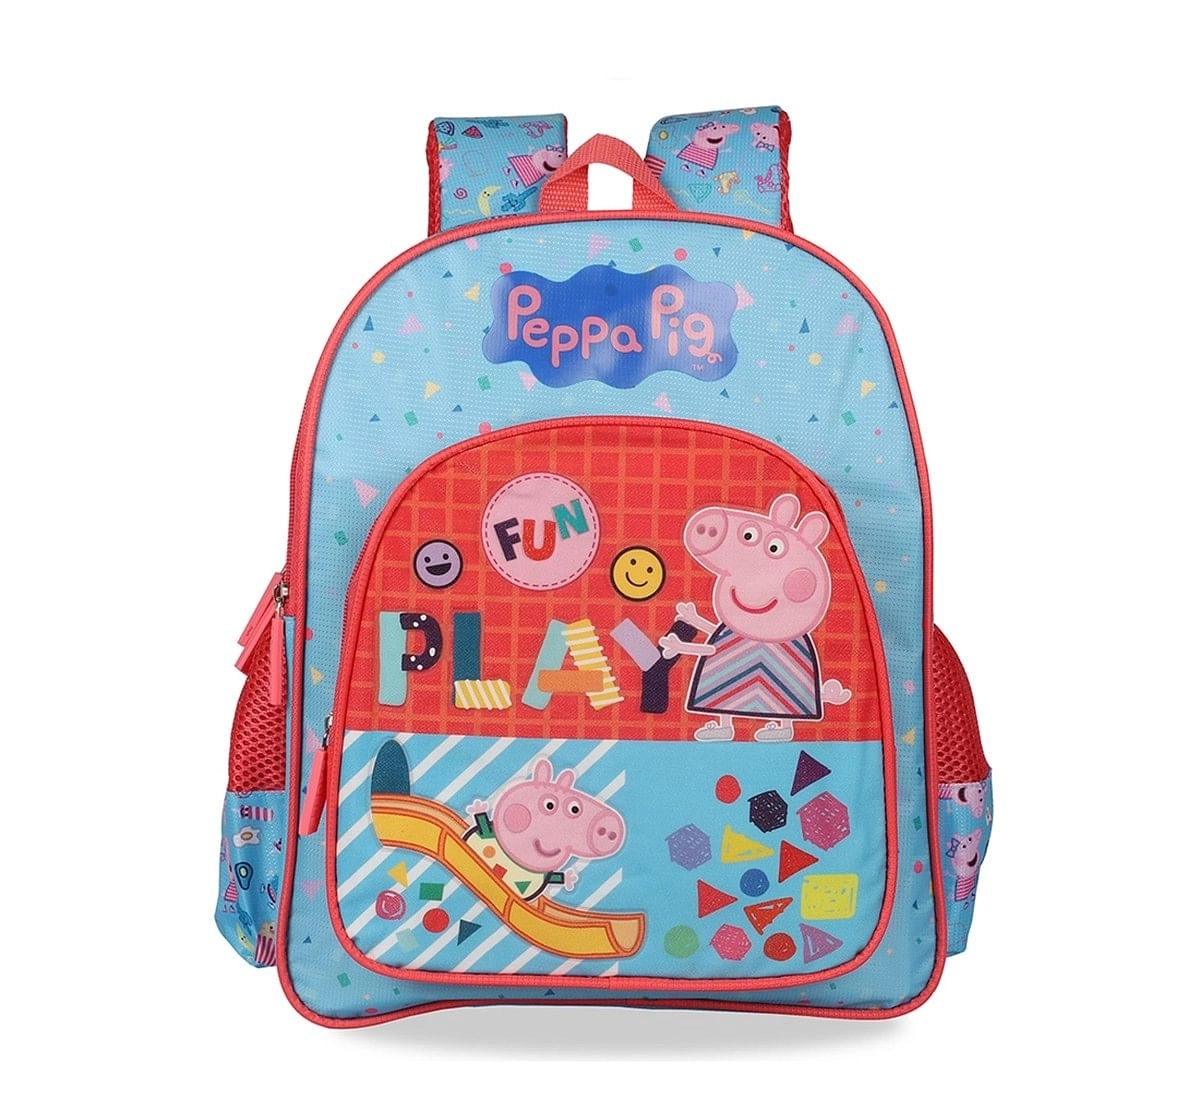  Peppa Pig Fun Play School Bag 41 Cm for Kids age 7Y+ 